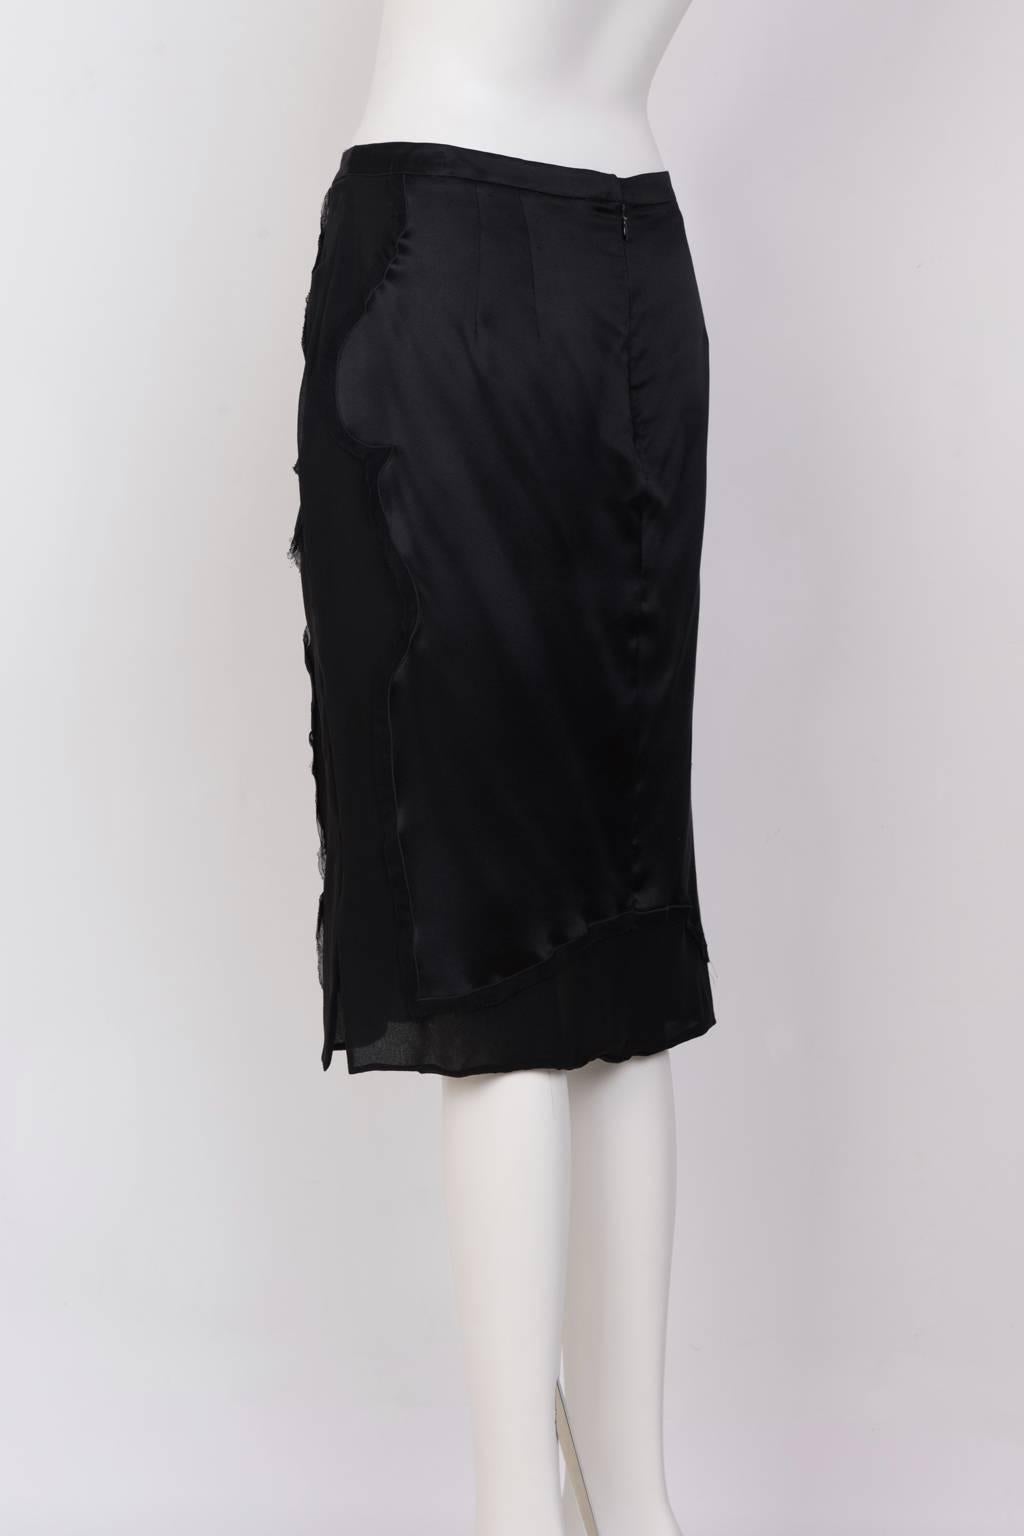 Women's YVES SAINT LAURENT Pencil Skirt In Black Satin And Silk Crepe For Sale